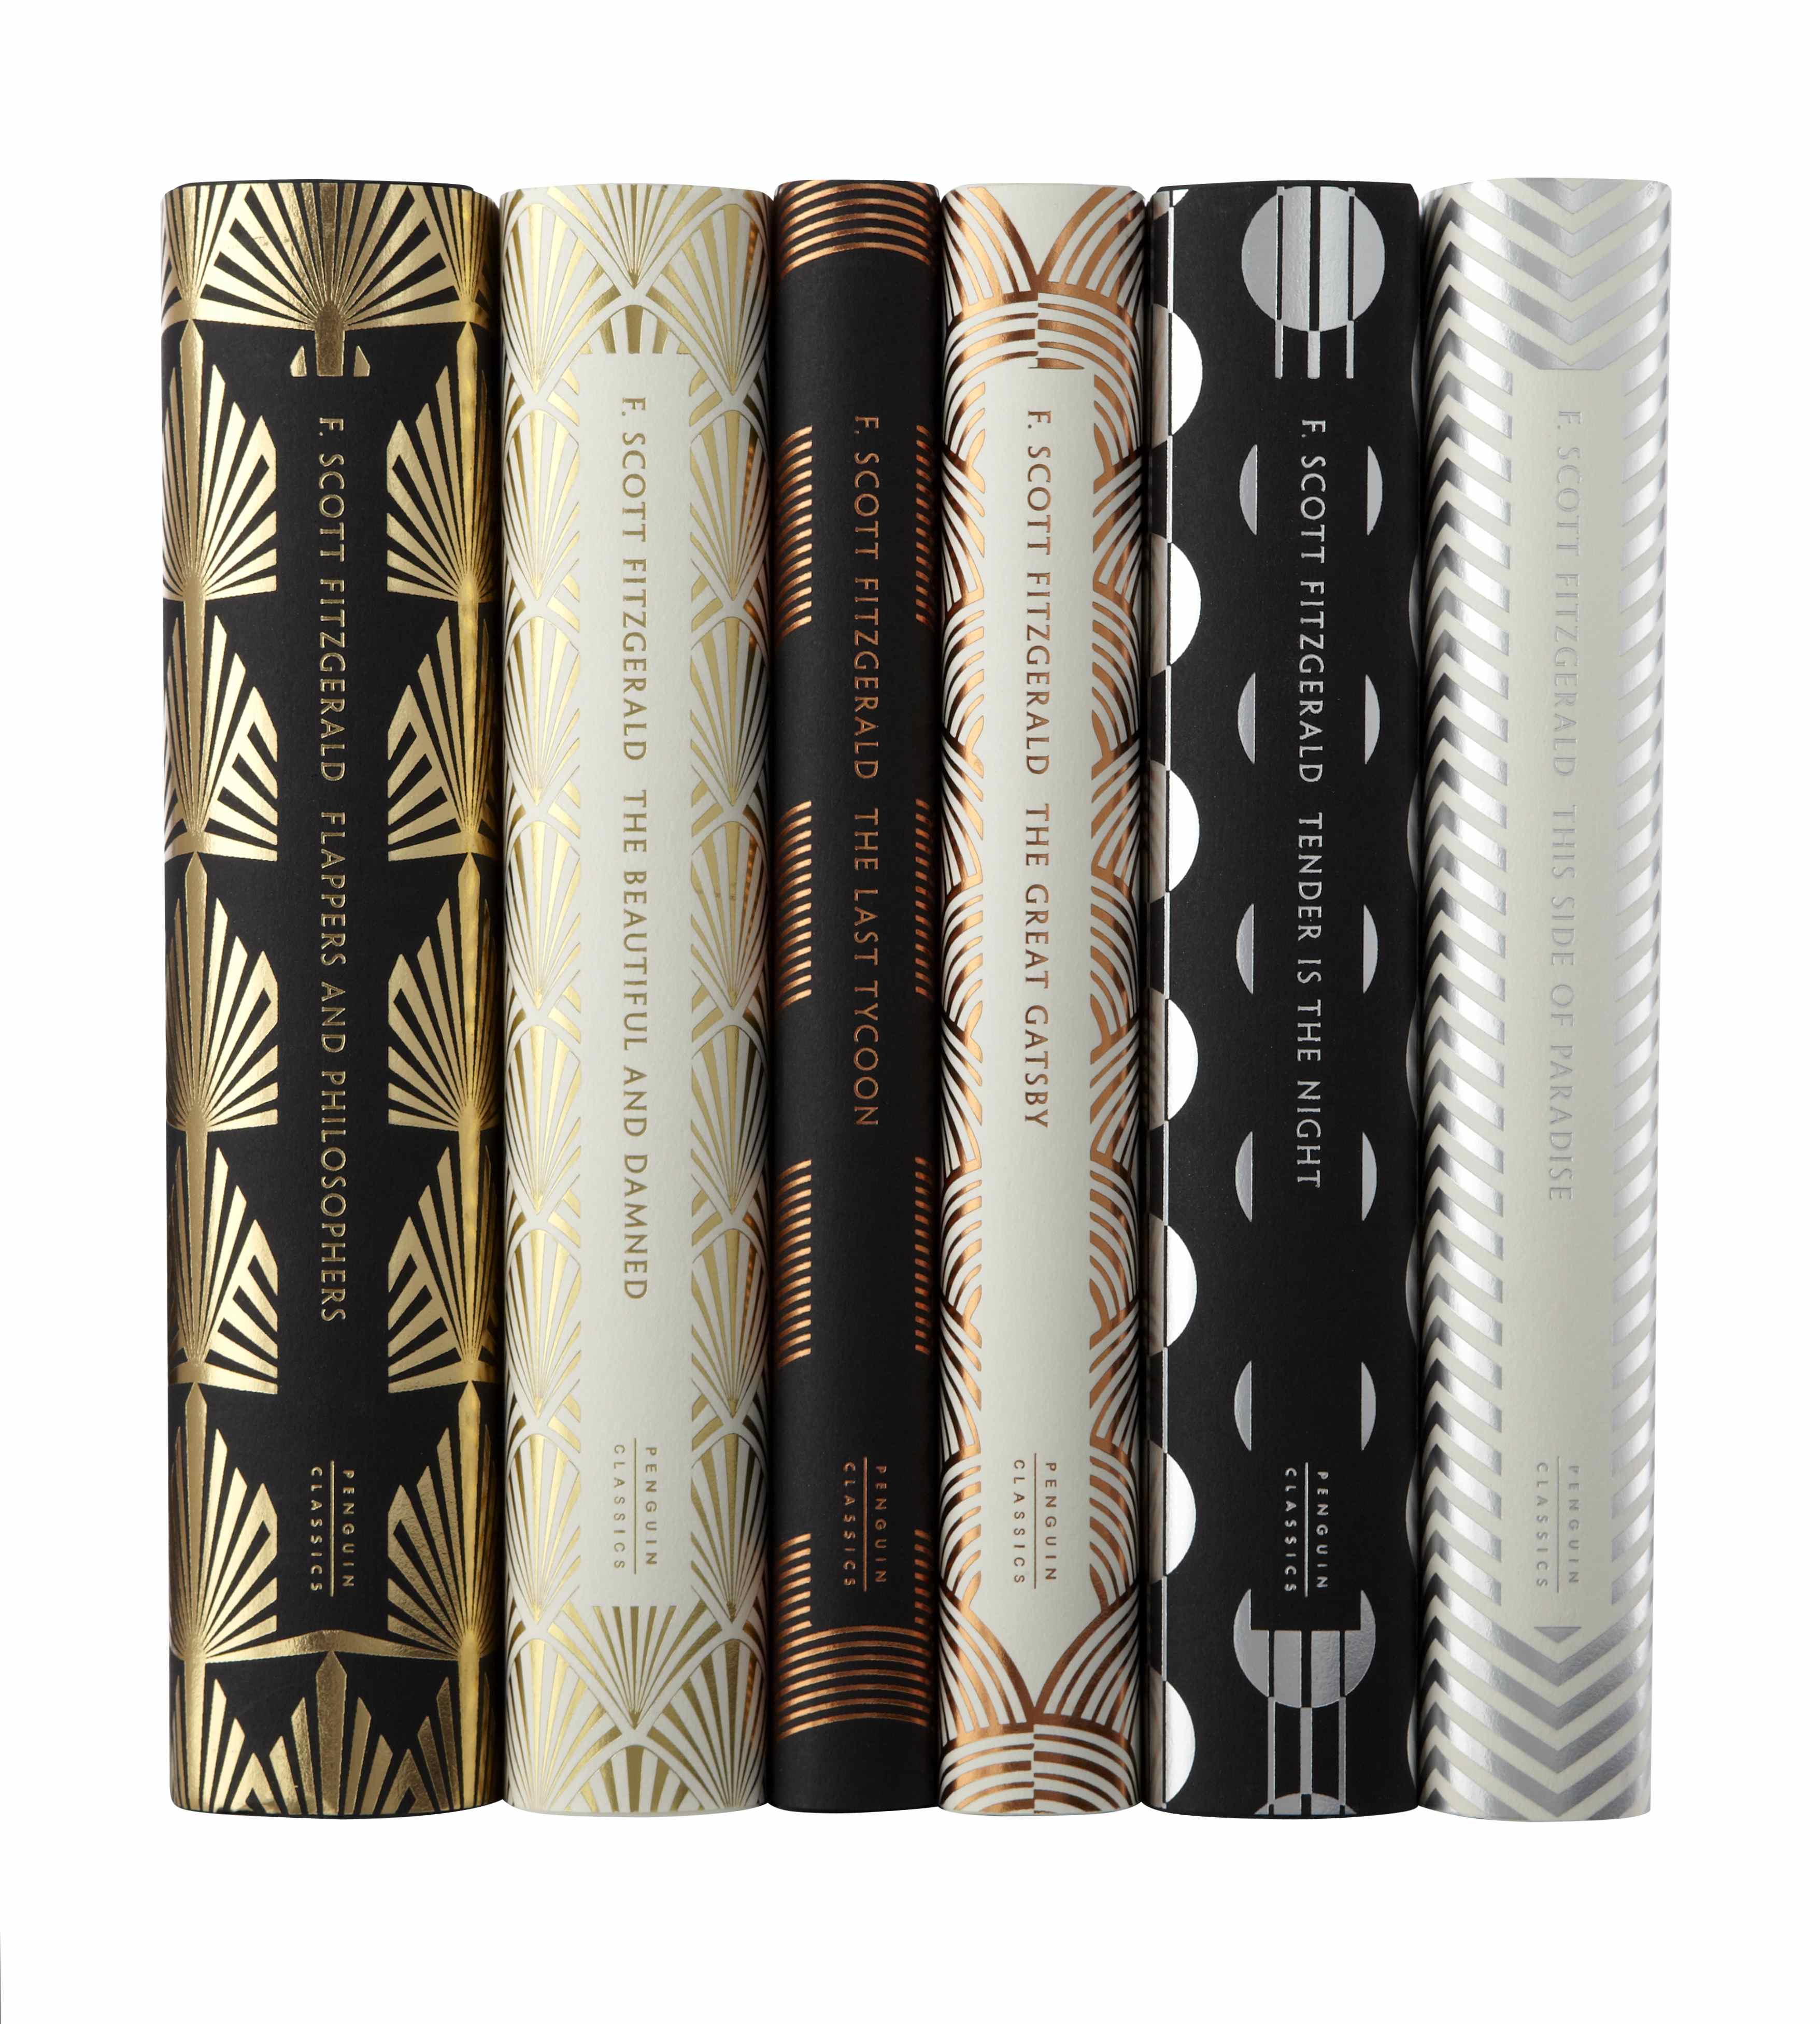 F Scott Fitzgerald novels designed by Coralie Bickford-Smith for Penguin